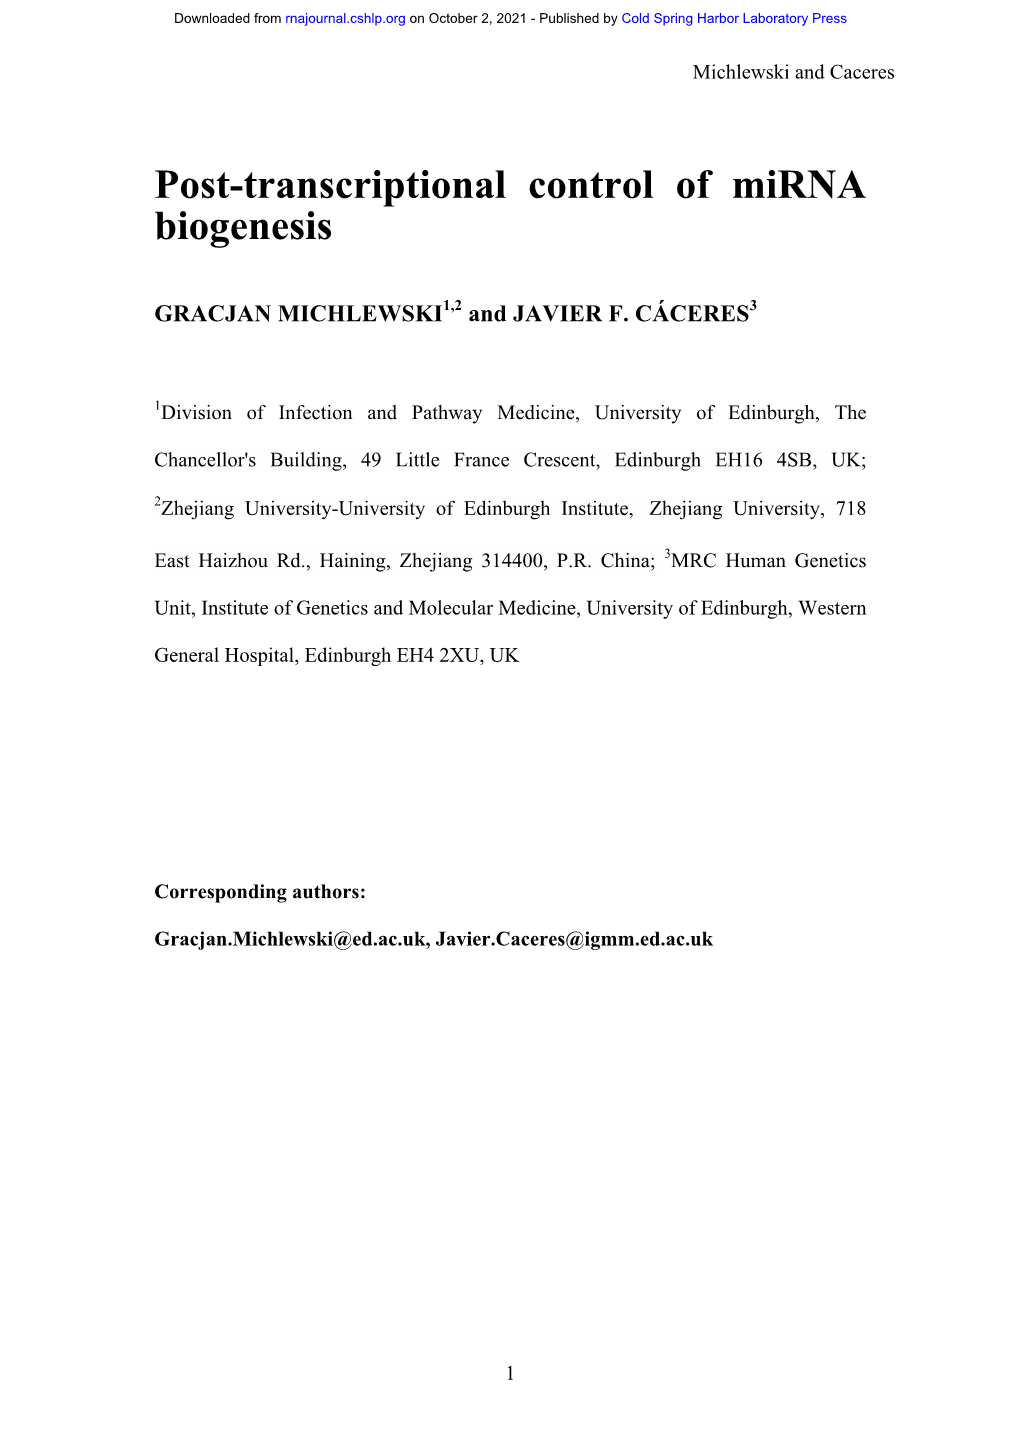 Post-Transcriptional Control of Mirna Biogenesis